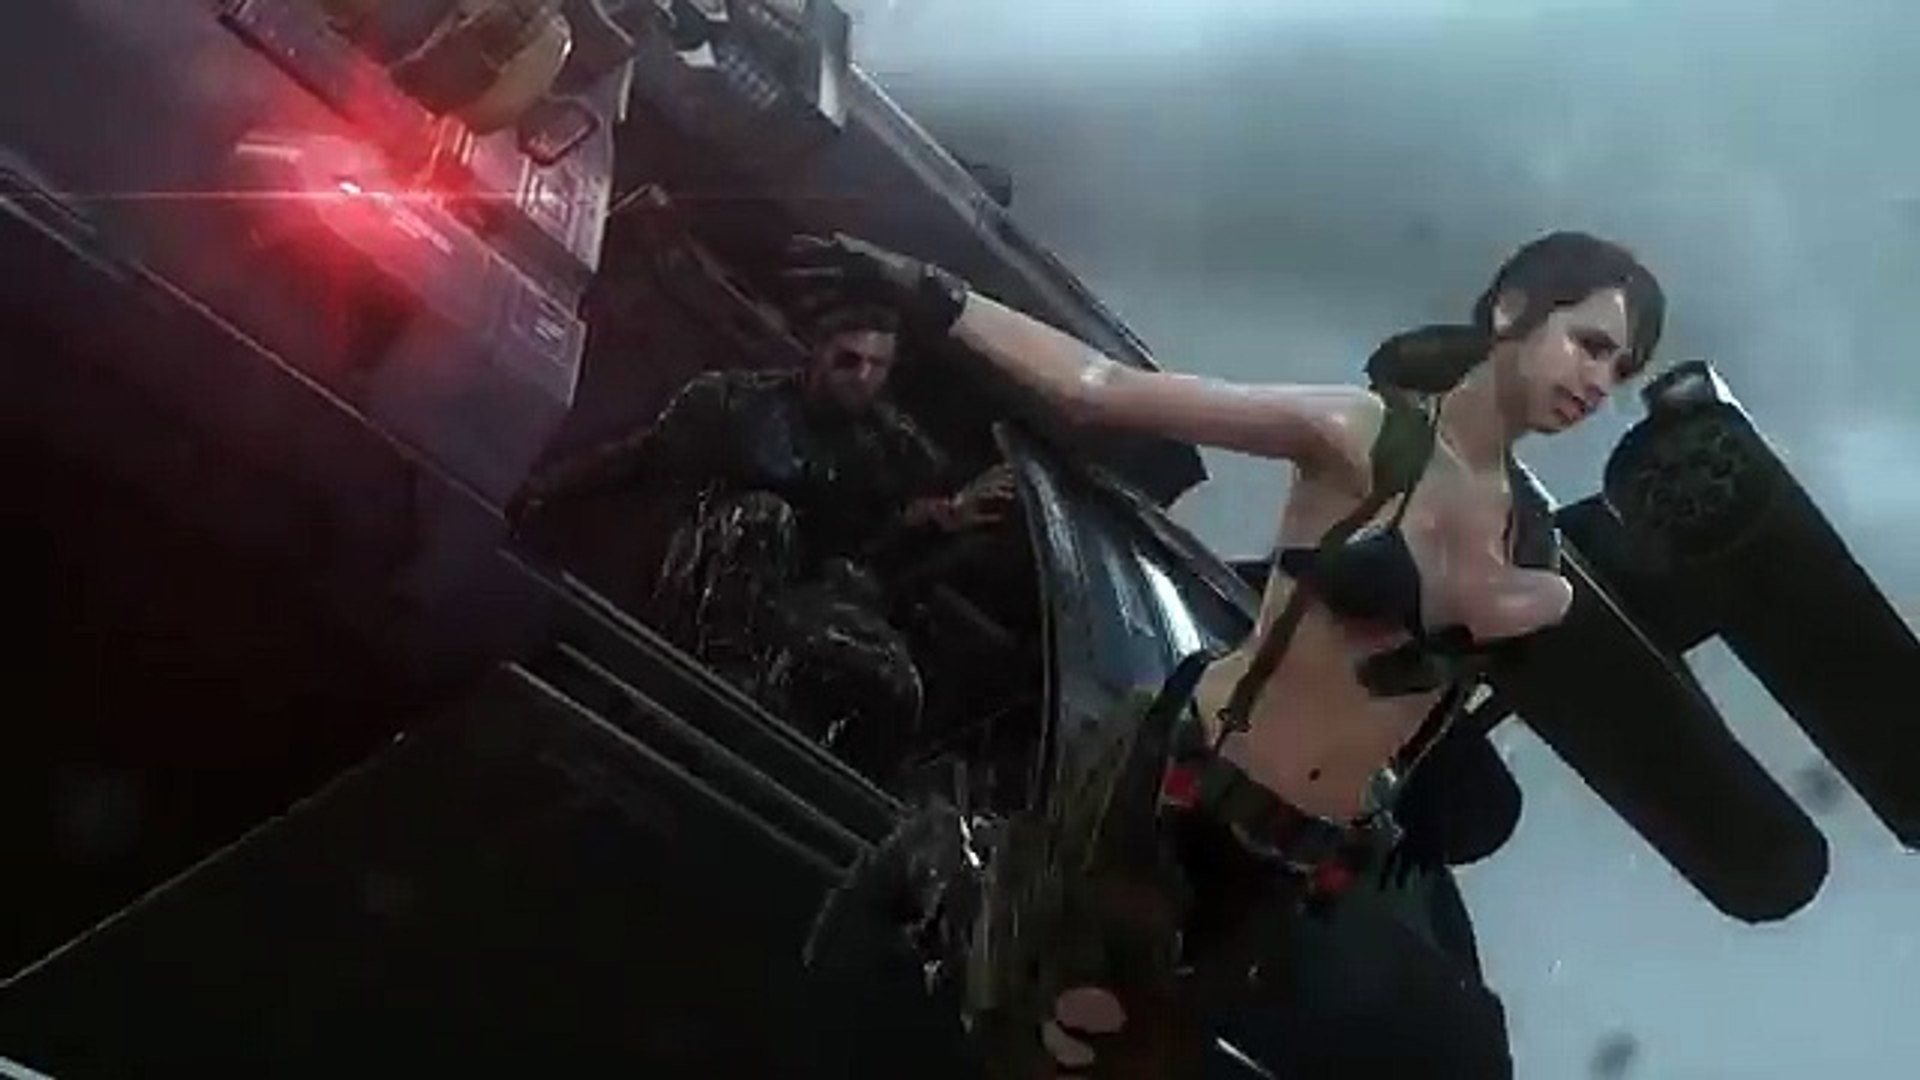 1920x1080 Quiet: Dancing in the Rain - Metal Gear Solid V the Phantom Pain [Full HD]  - video dailymotion